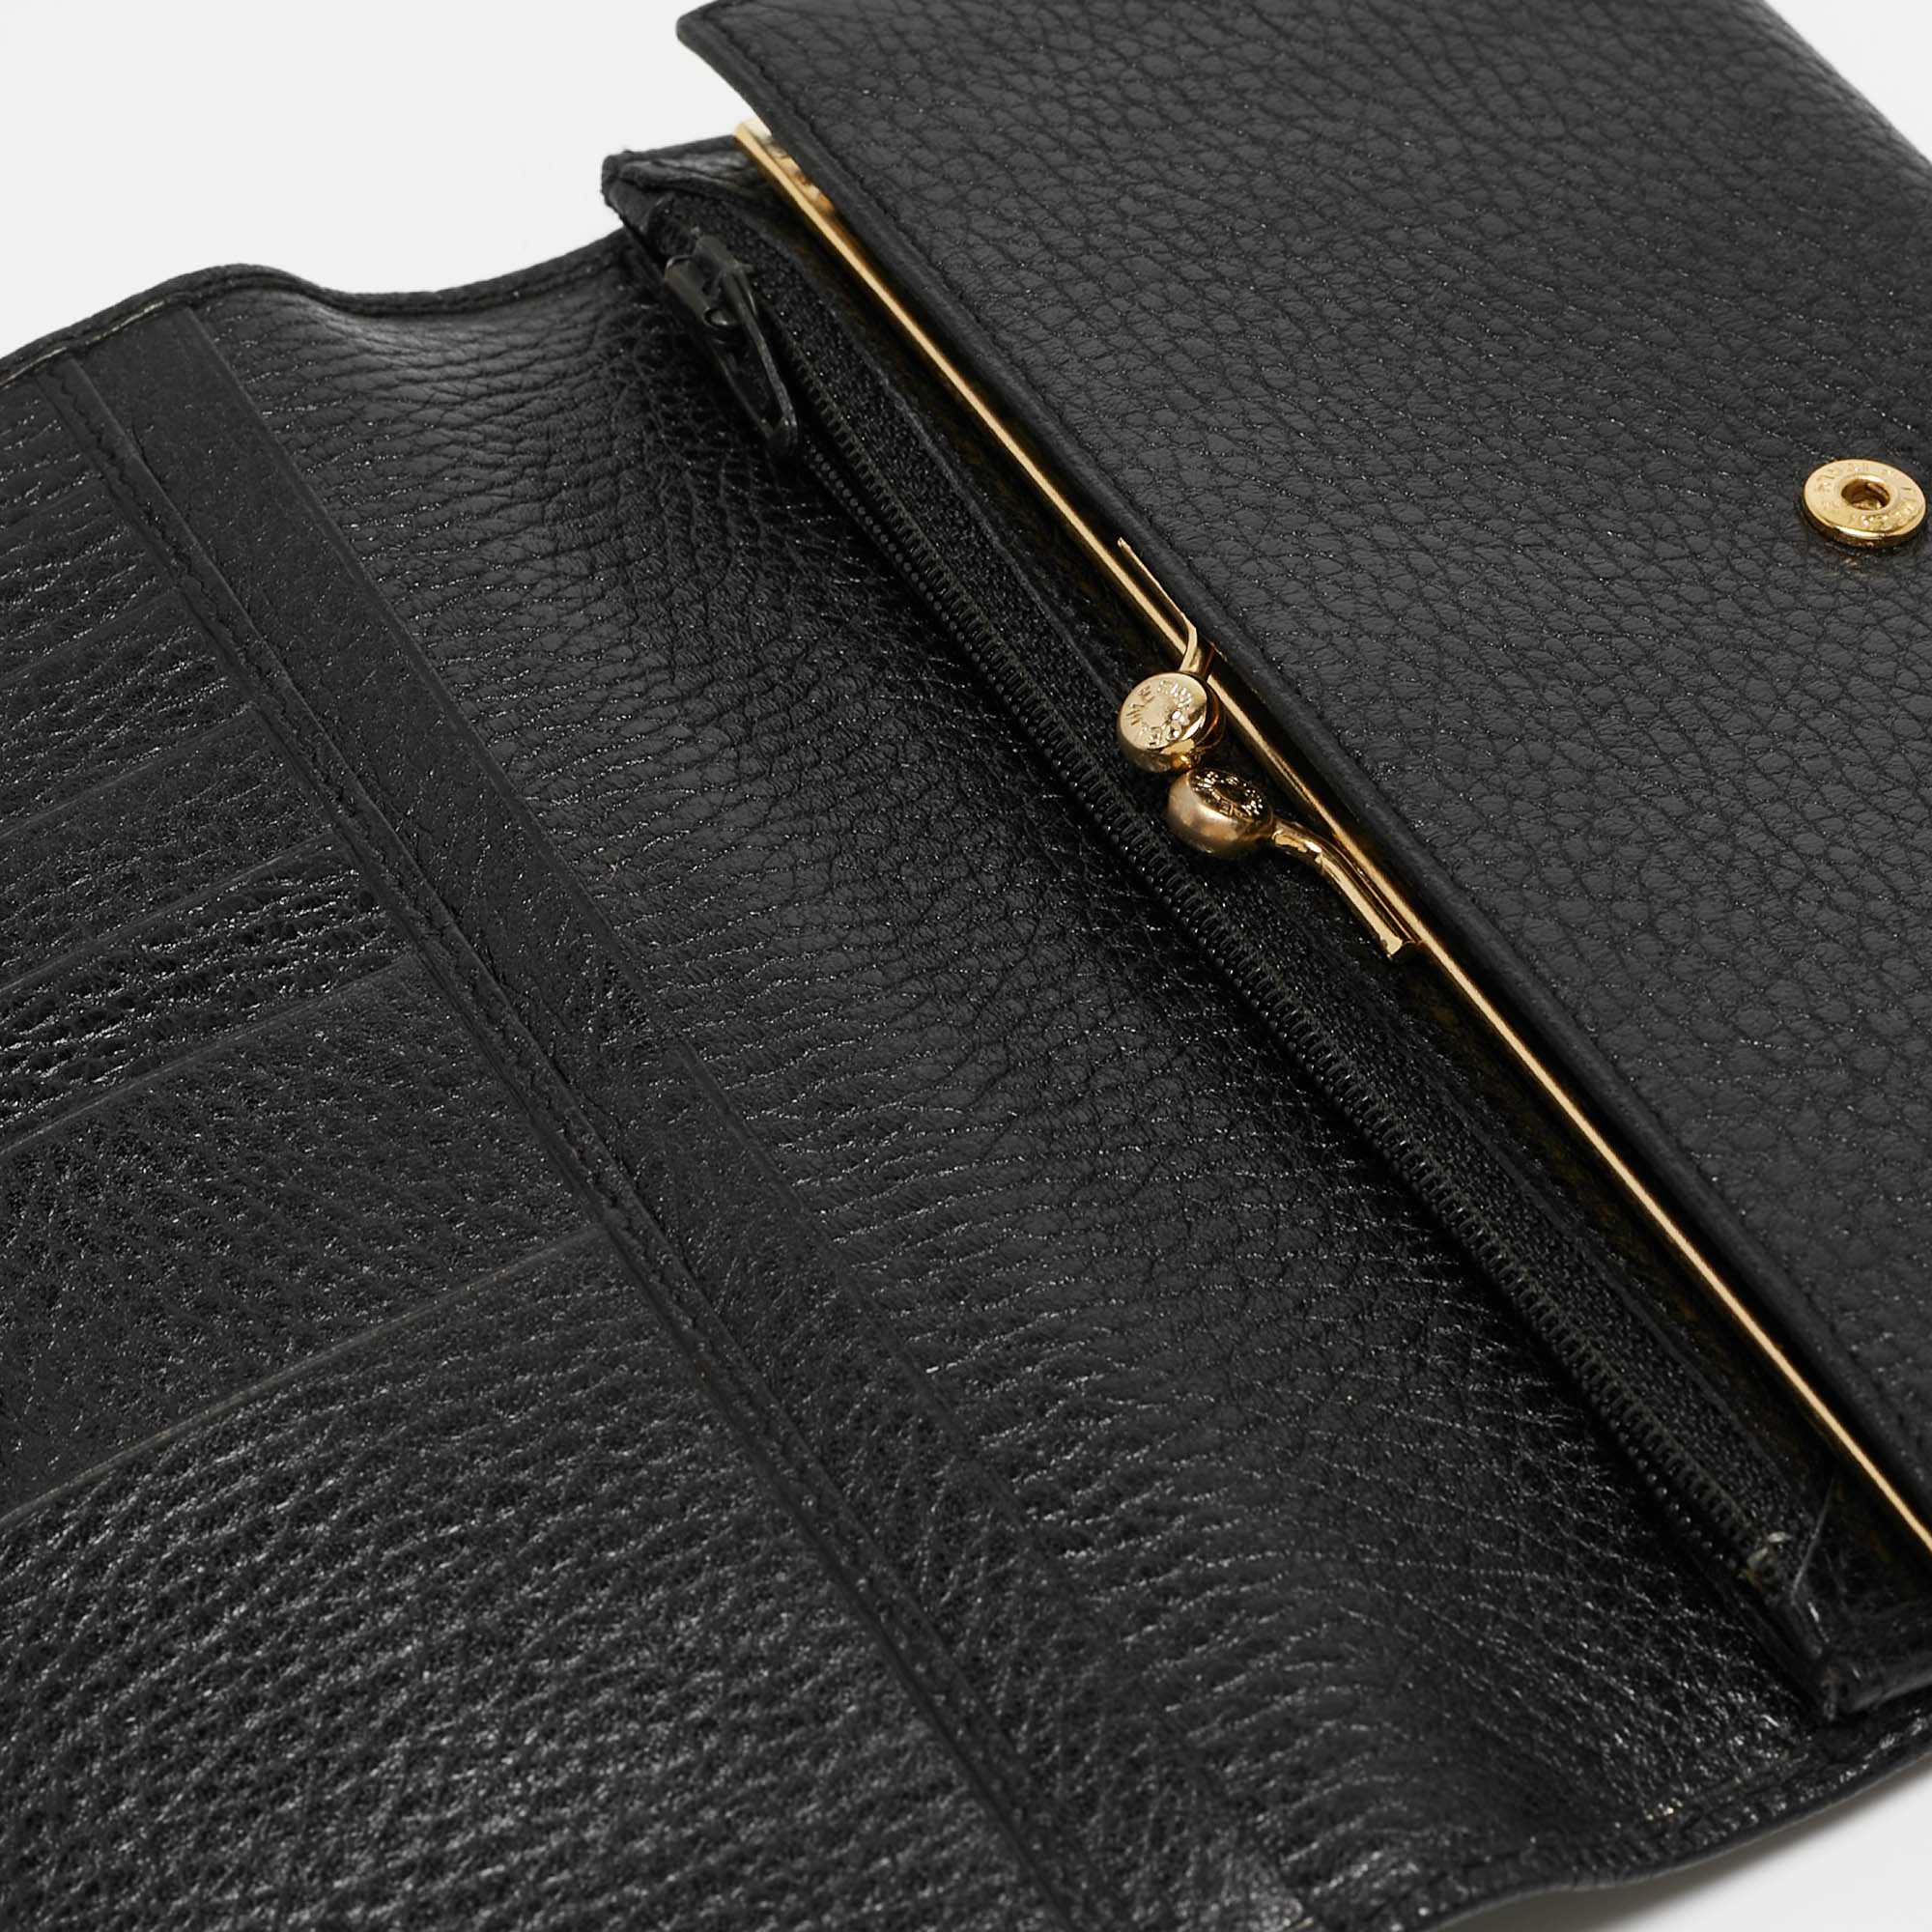 Celine Black Leather Flap Continental Wallet